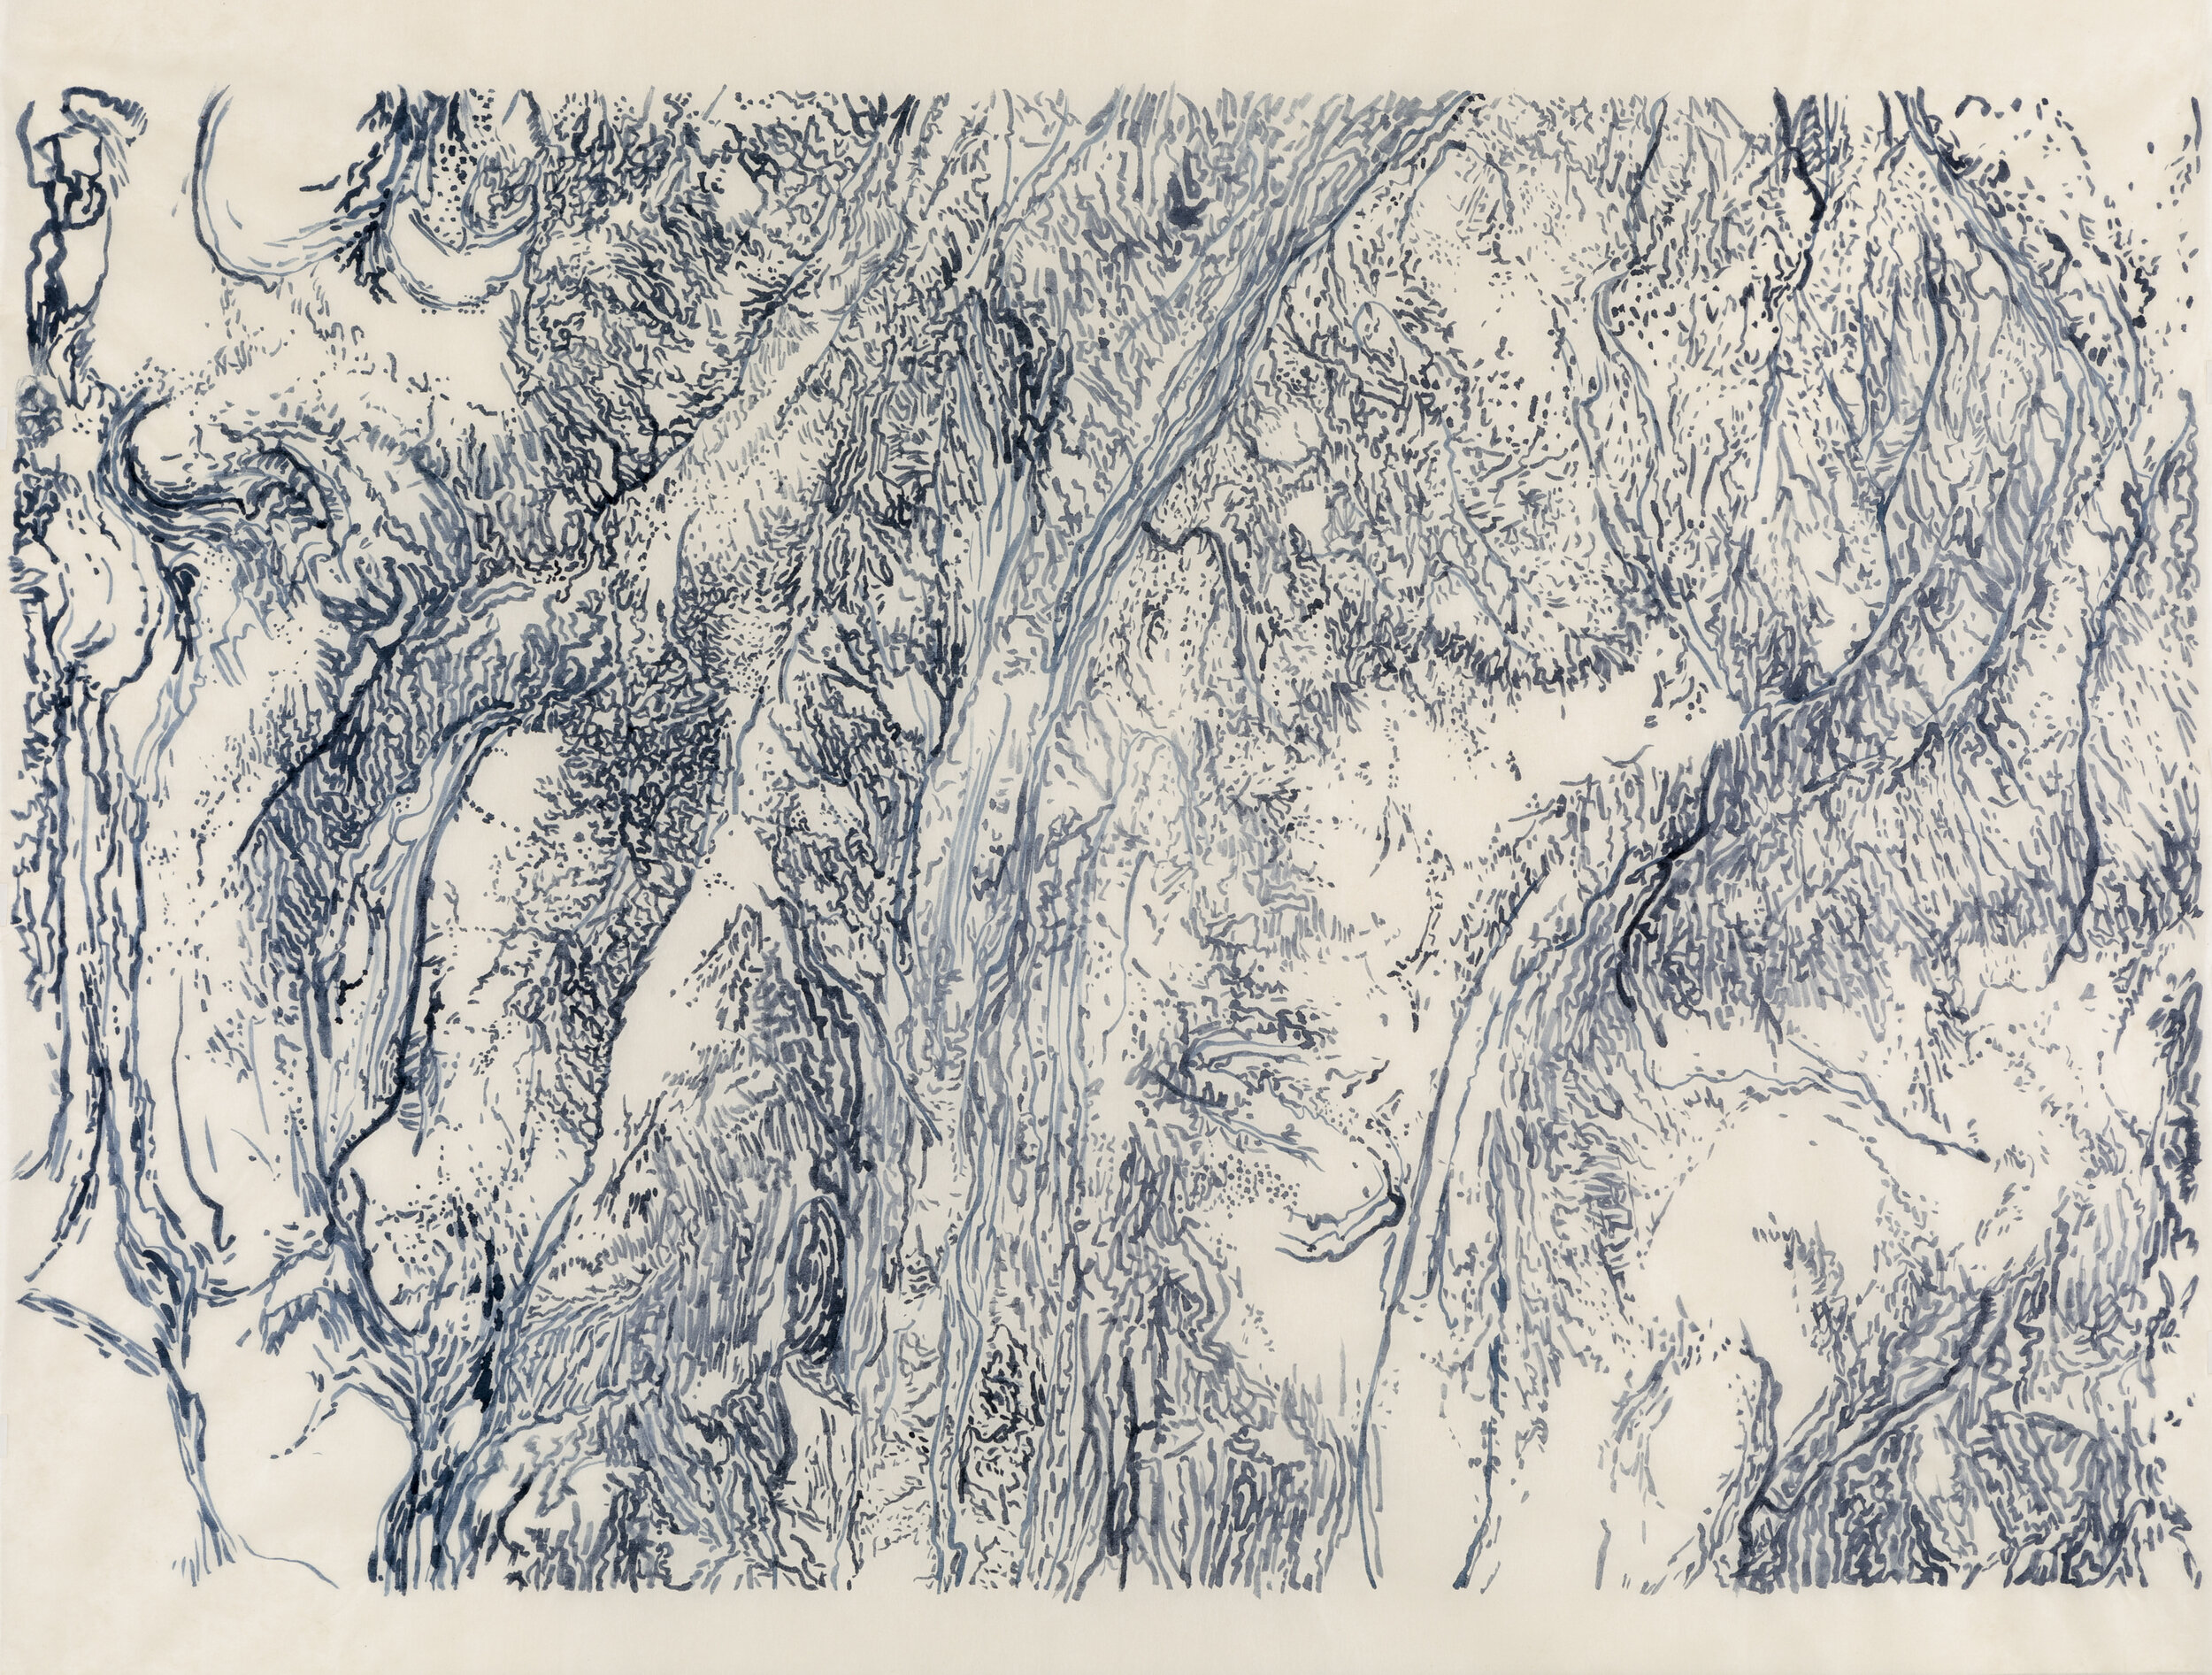    Mount Machapuchari, view 6, 2019   Grey blue ink on kozo paper 28” x 38” 